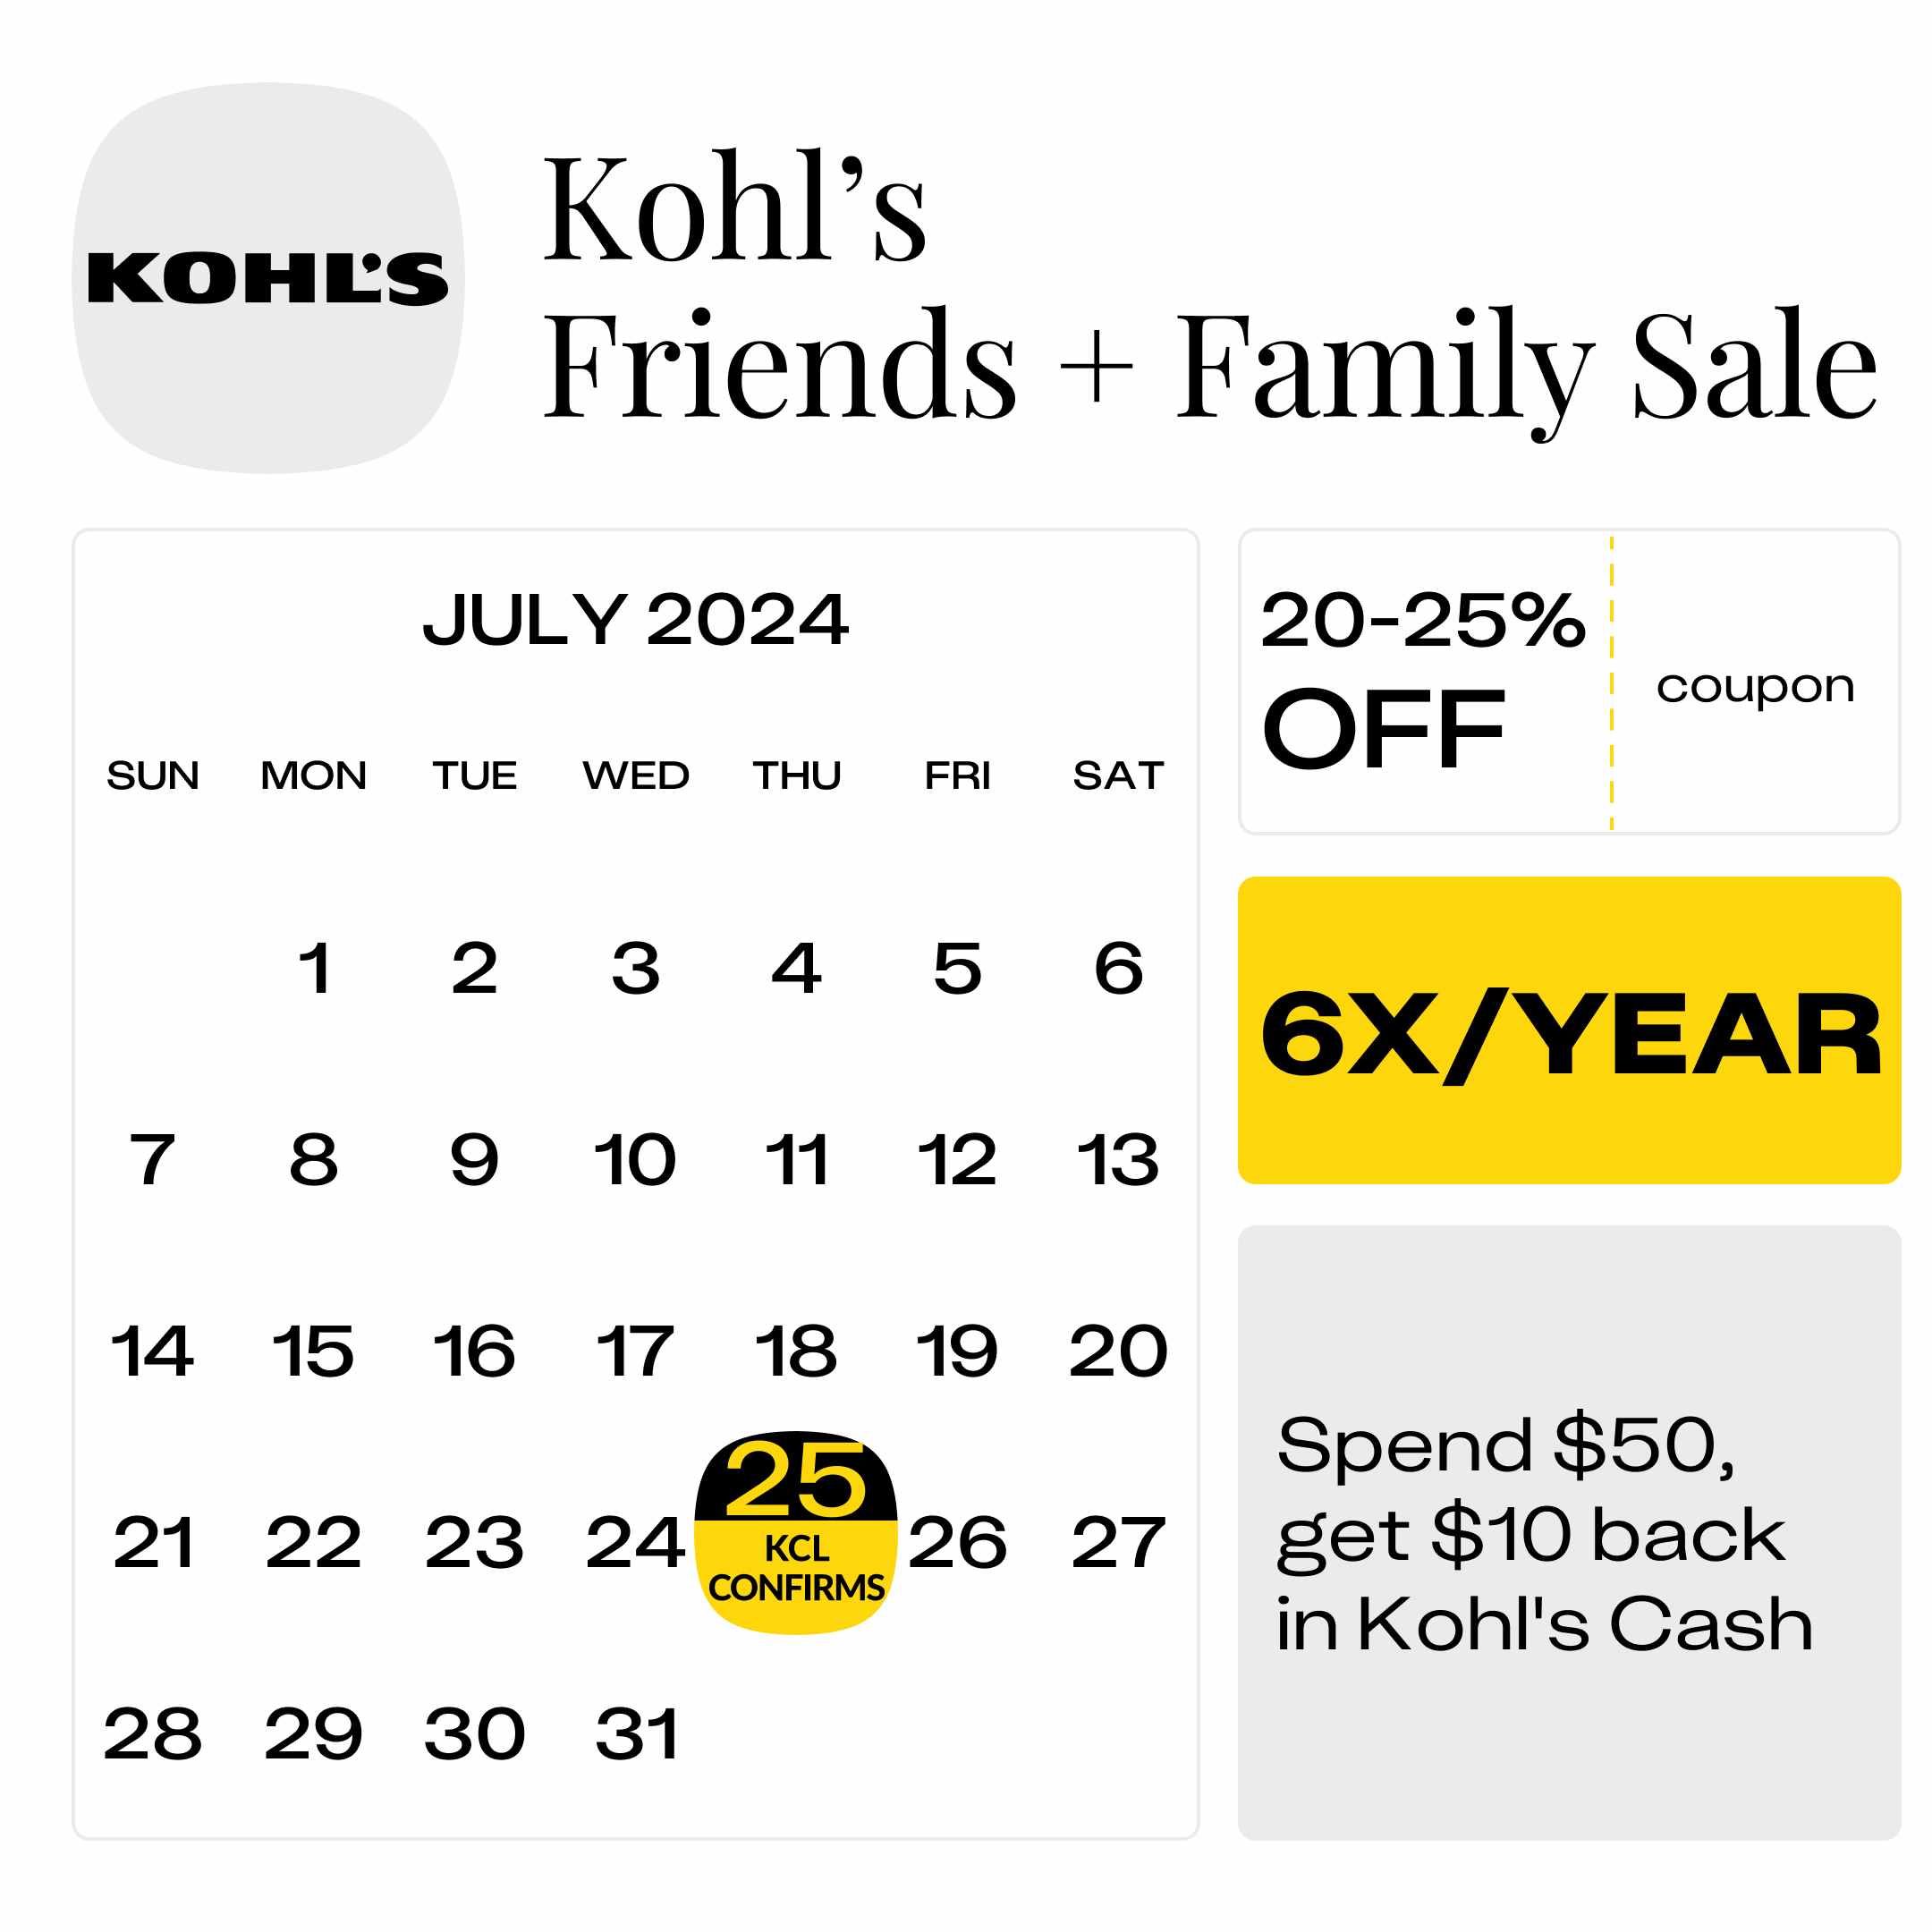 KCL confirms calendar Kohl's Friends & Family July 2024